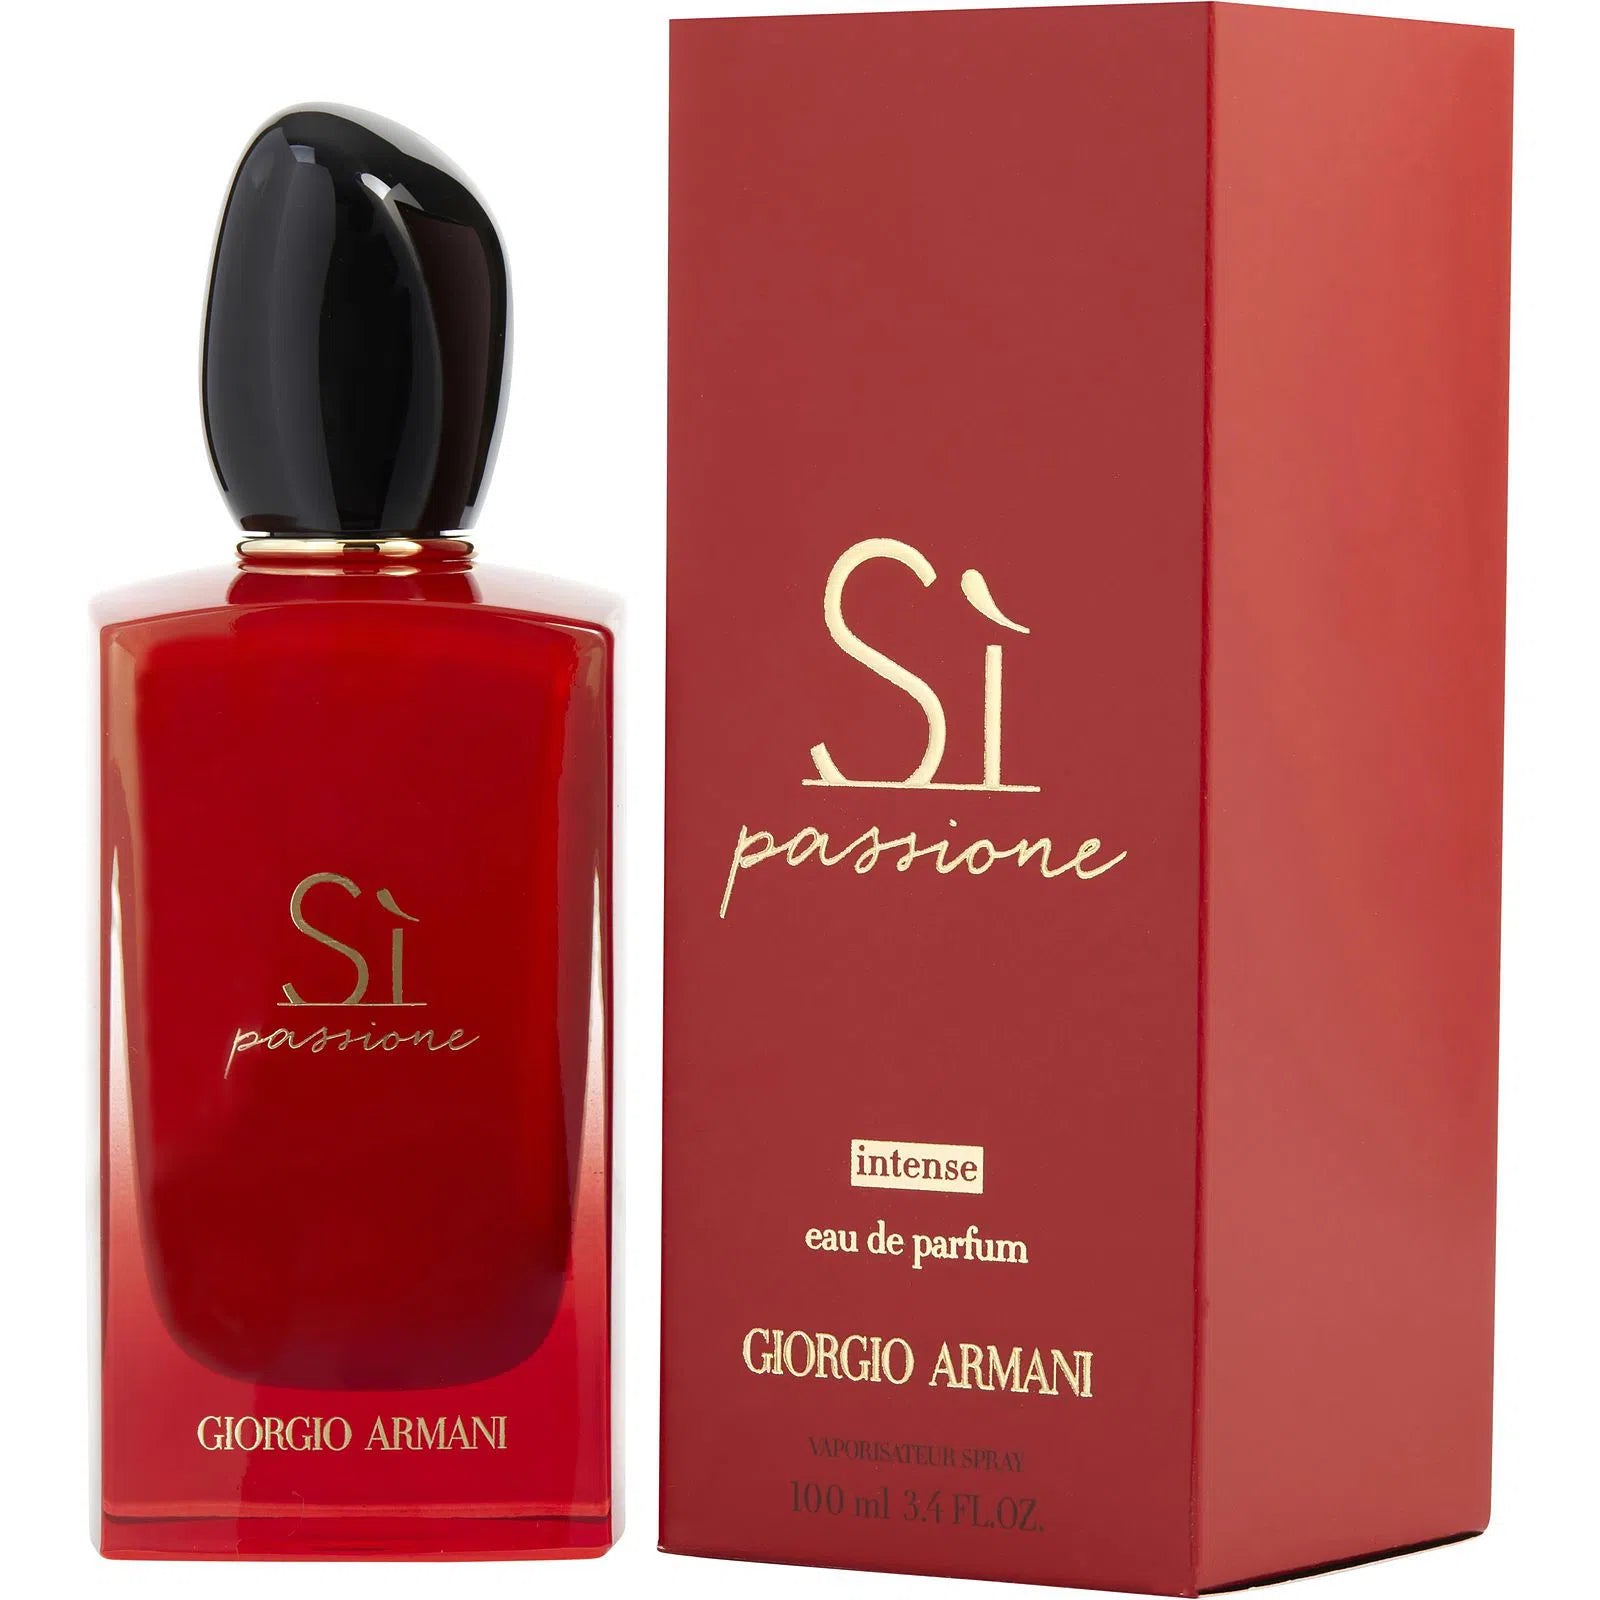 Perfume Giorgio Armani Si Passione Intense EDP (W) / 100 ml - 3614272826571- Prive Perfumes Honduras